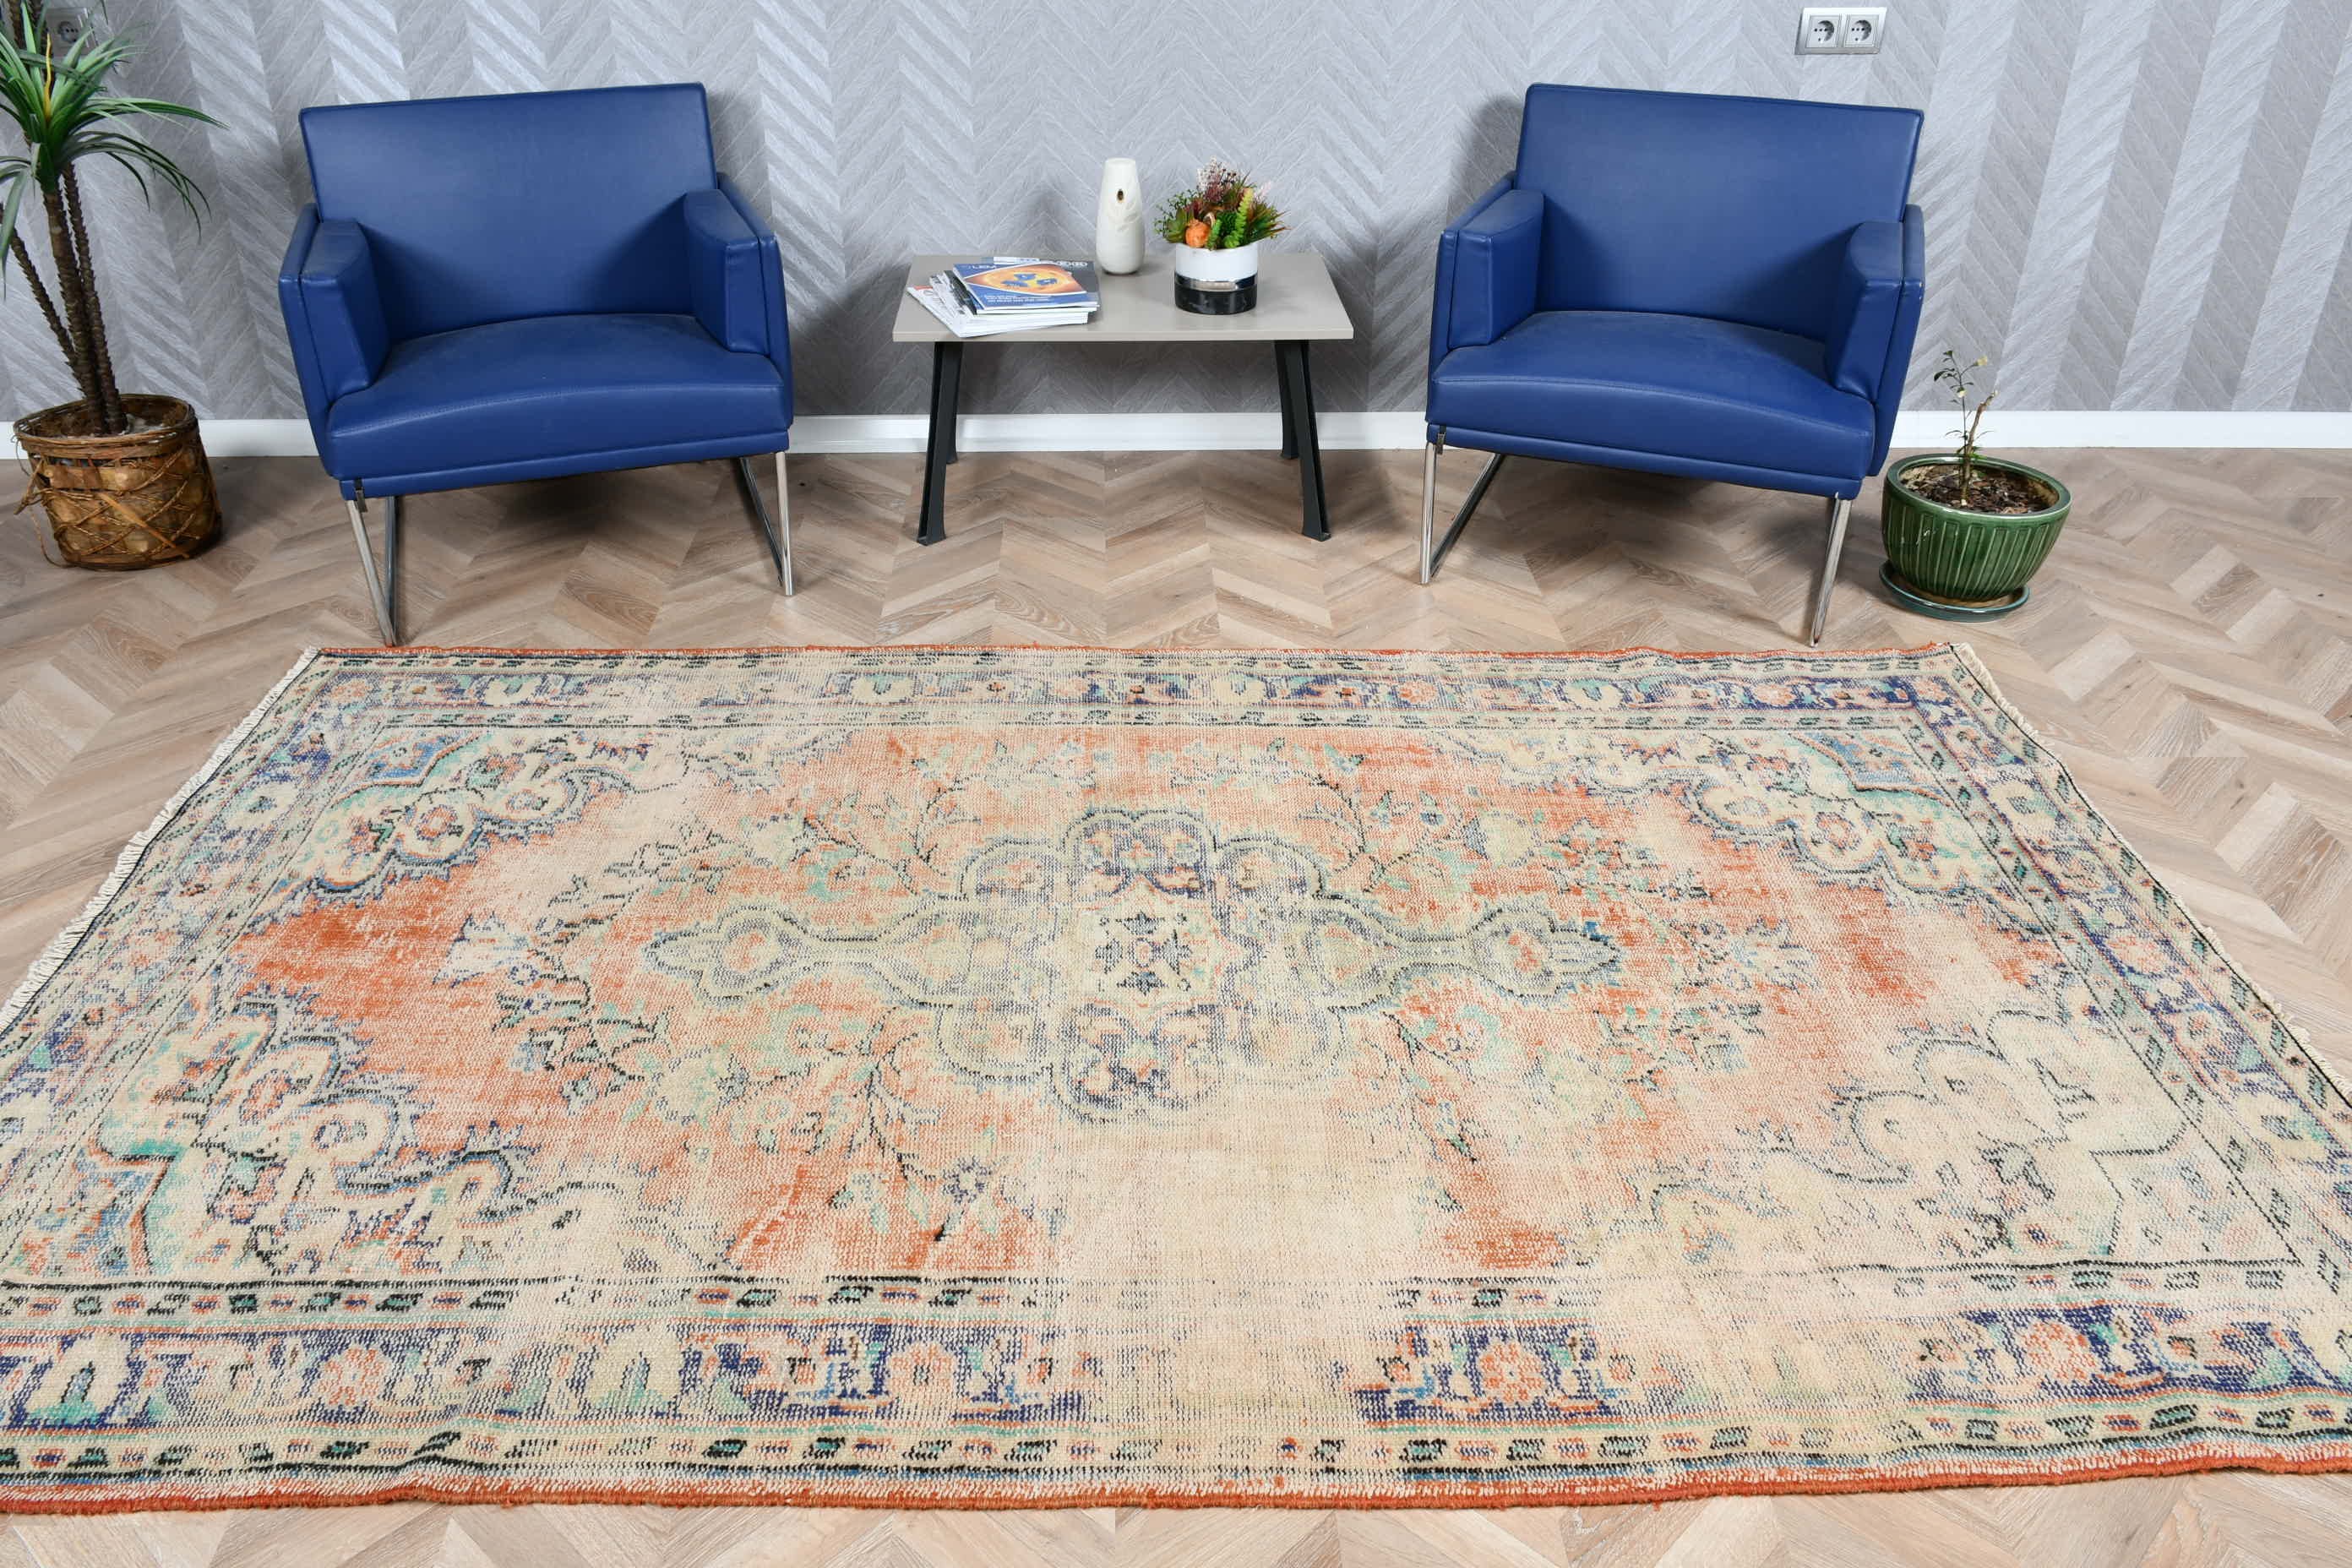 Anatolian Rug, Bedroom Rugs, Vintage Rug, Turkish Rugs, Rugs for Living Room, 5.3x8.9 ft Large Rug, Living Room Rug, Orange Bedroom Rugs